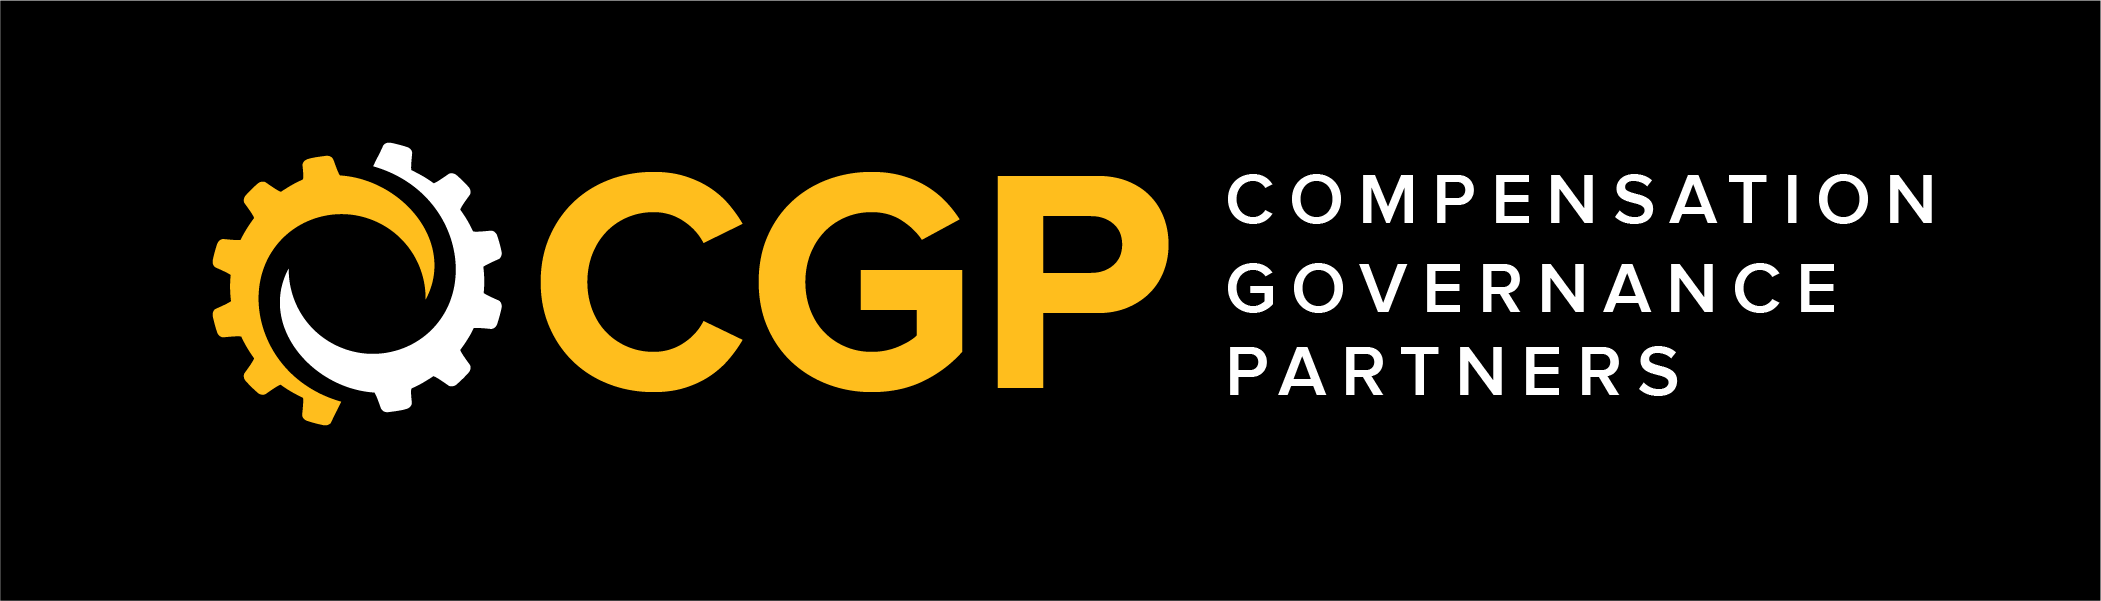 Compensation Governance Partners